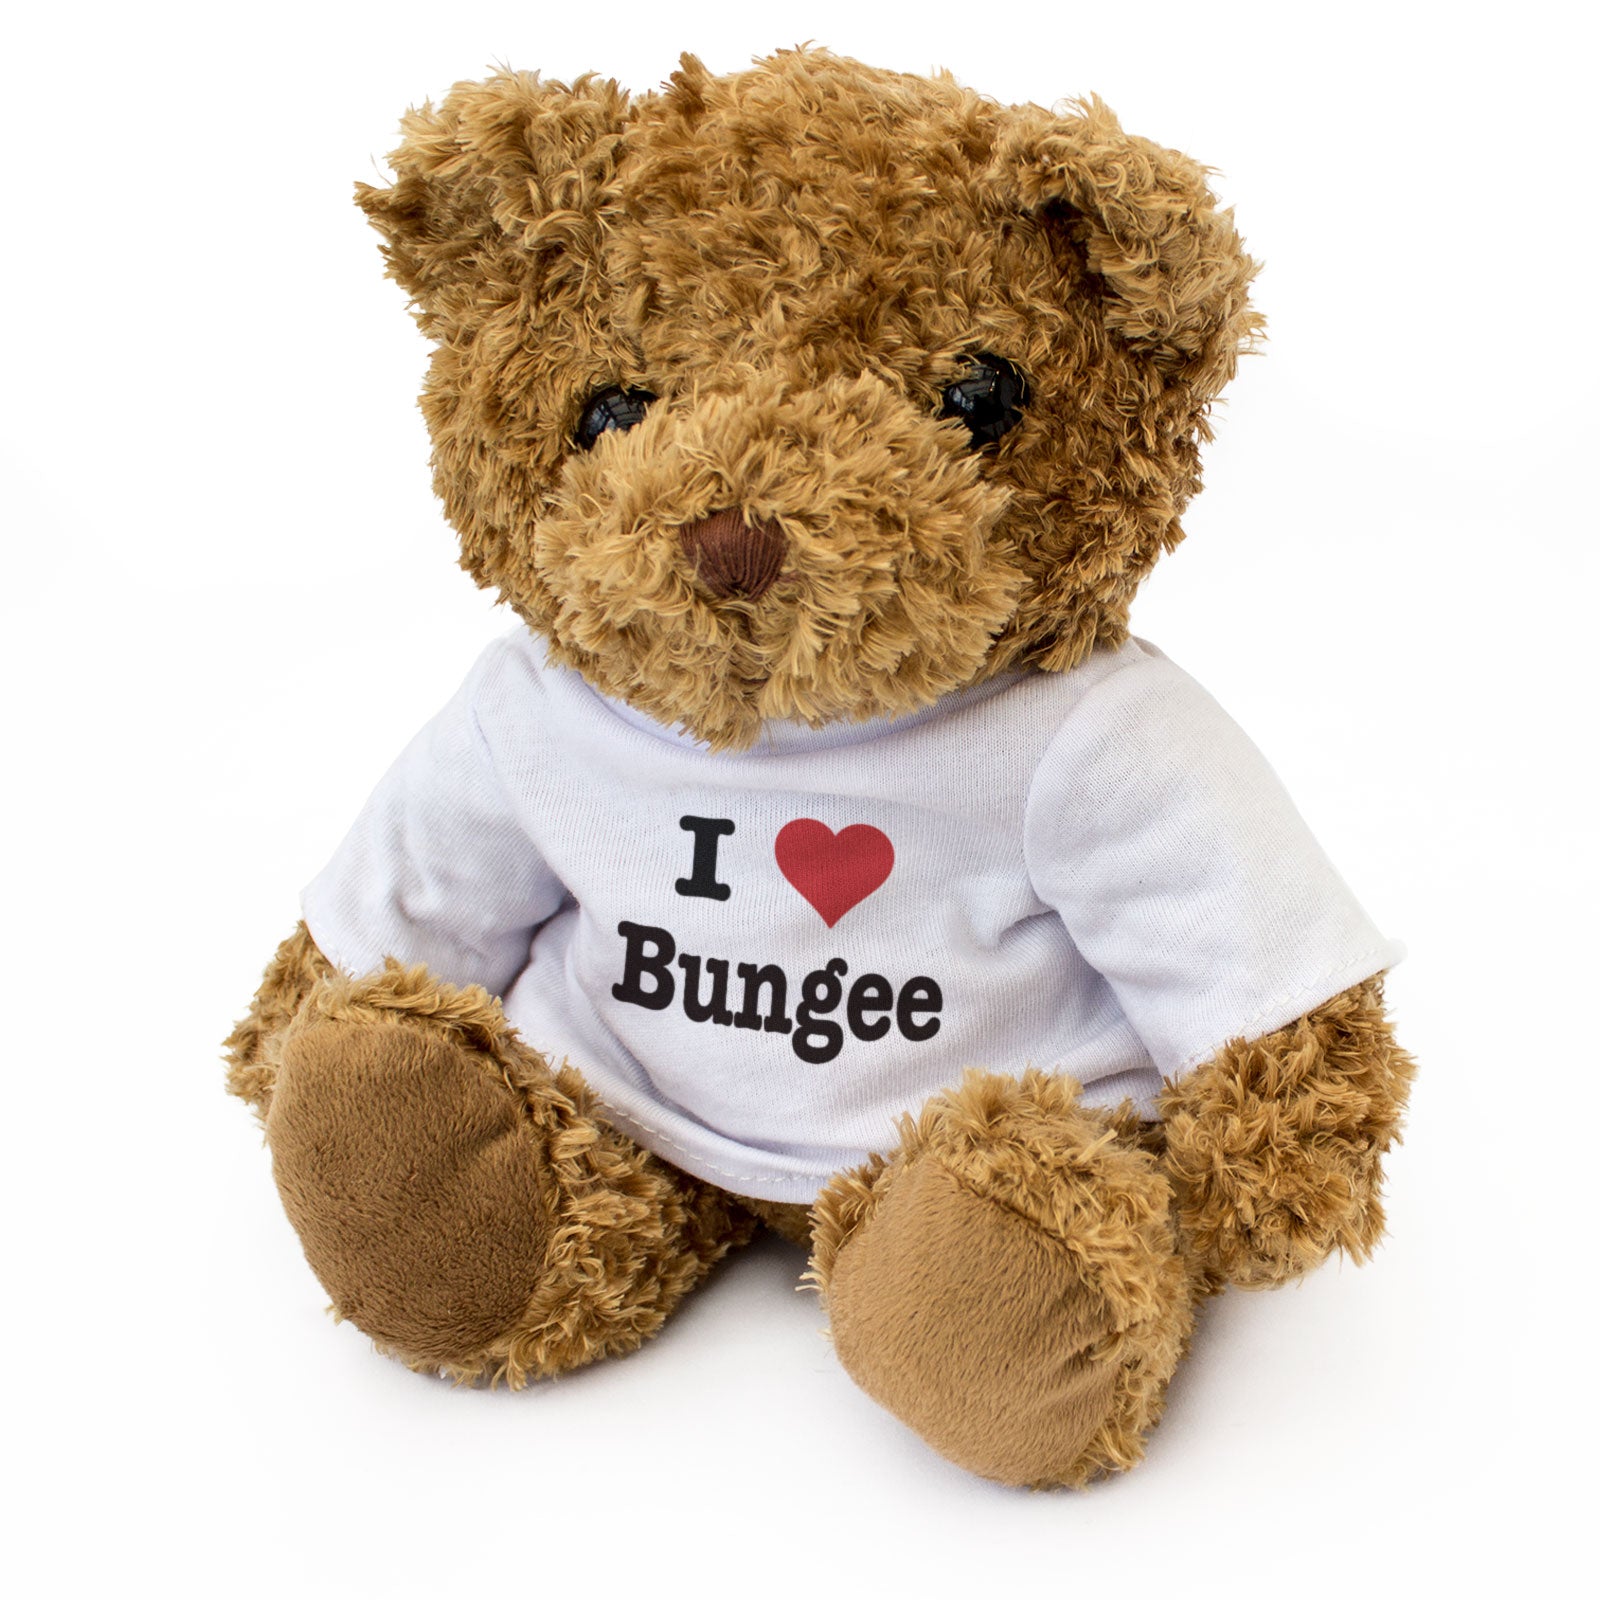 I Love Bungee - Teddy Bear